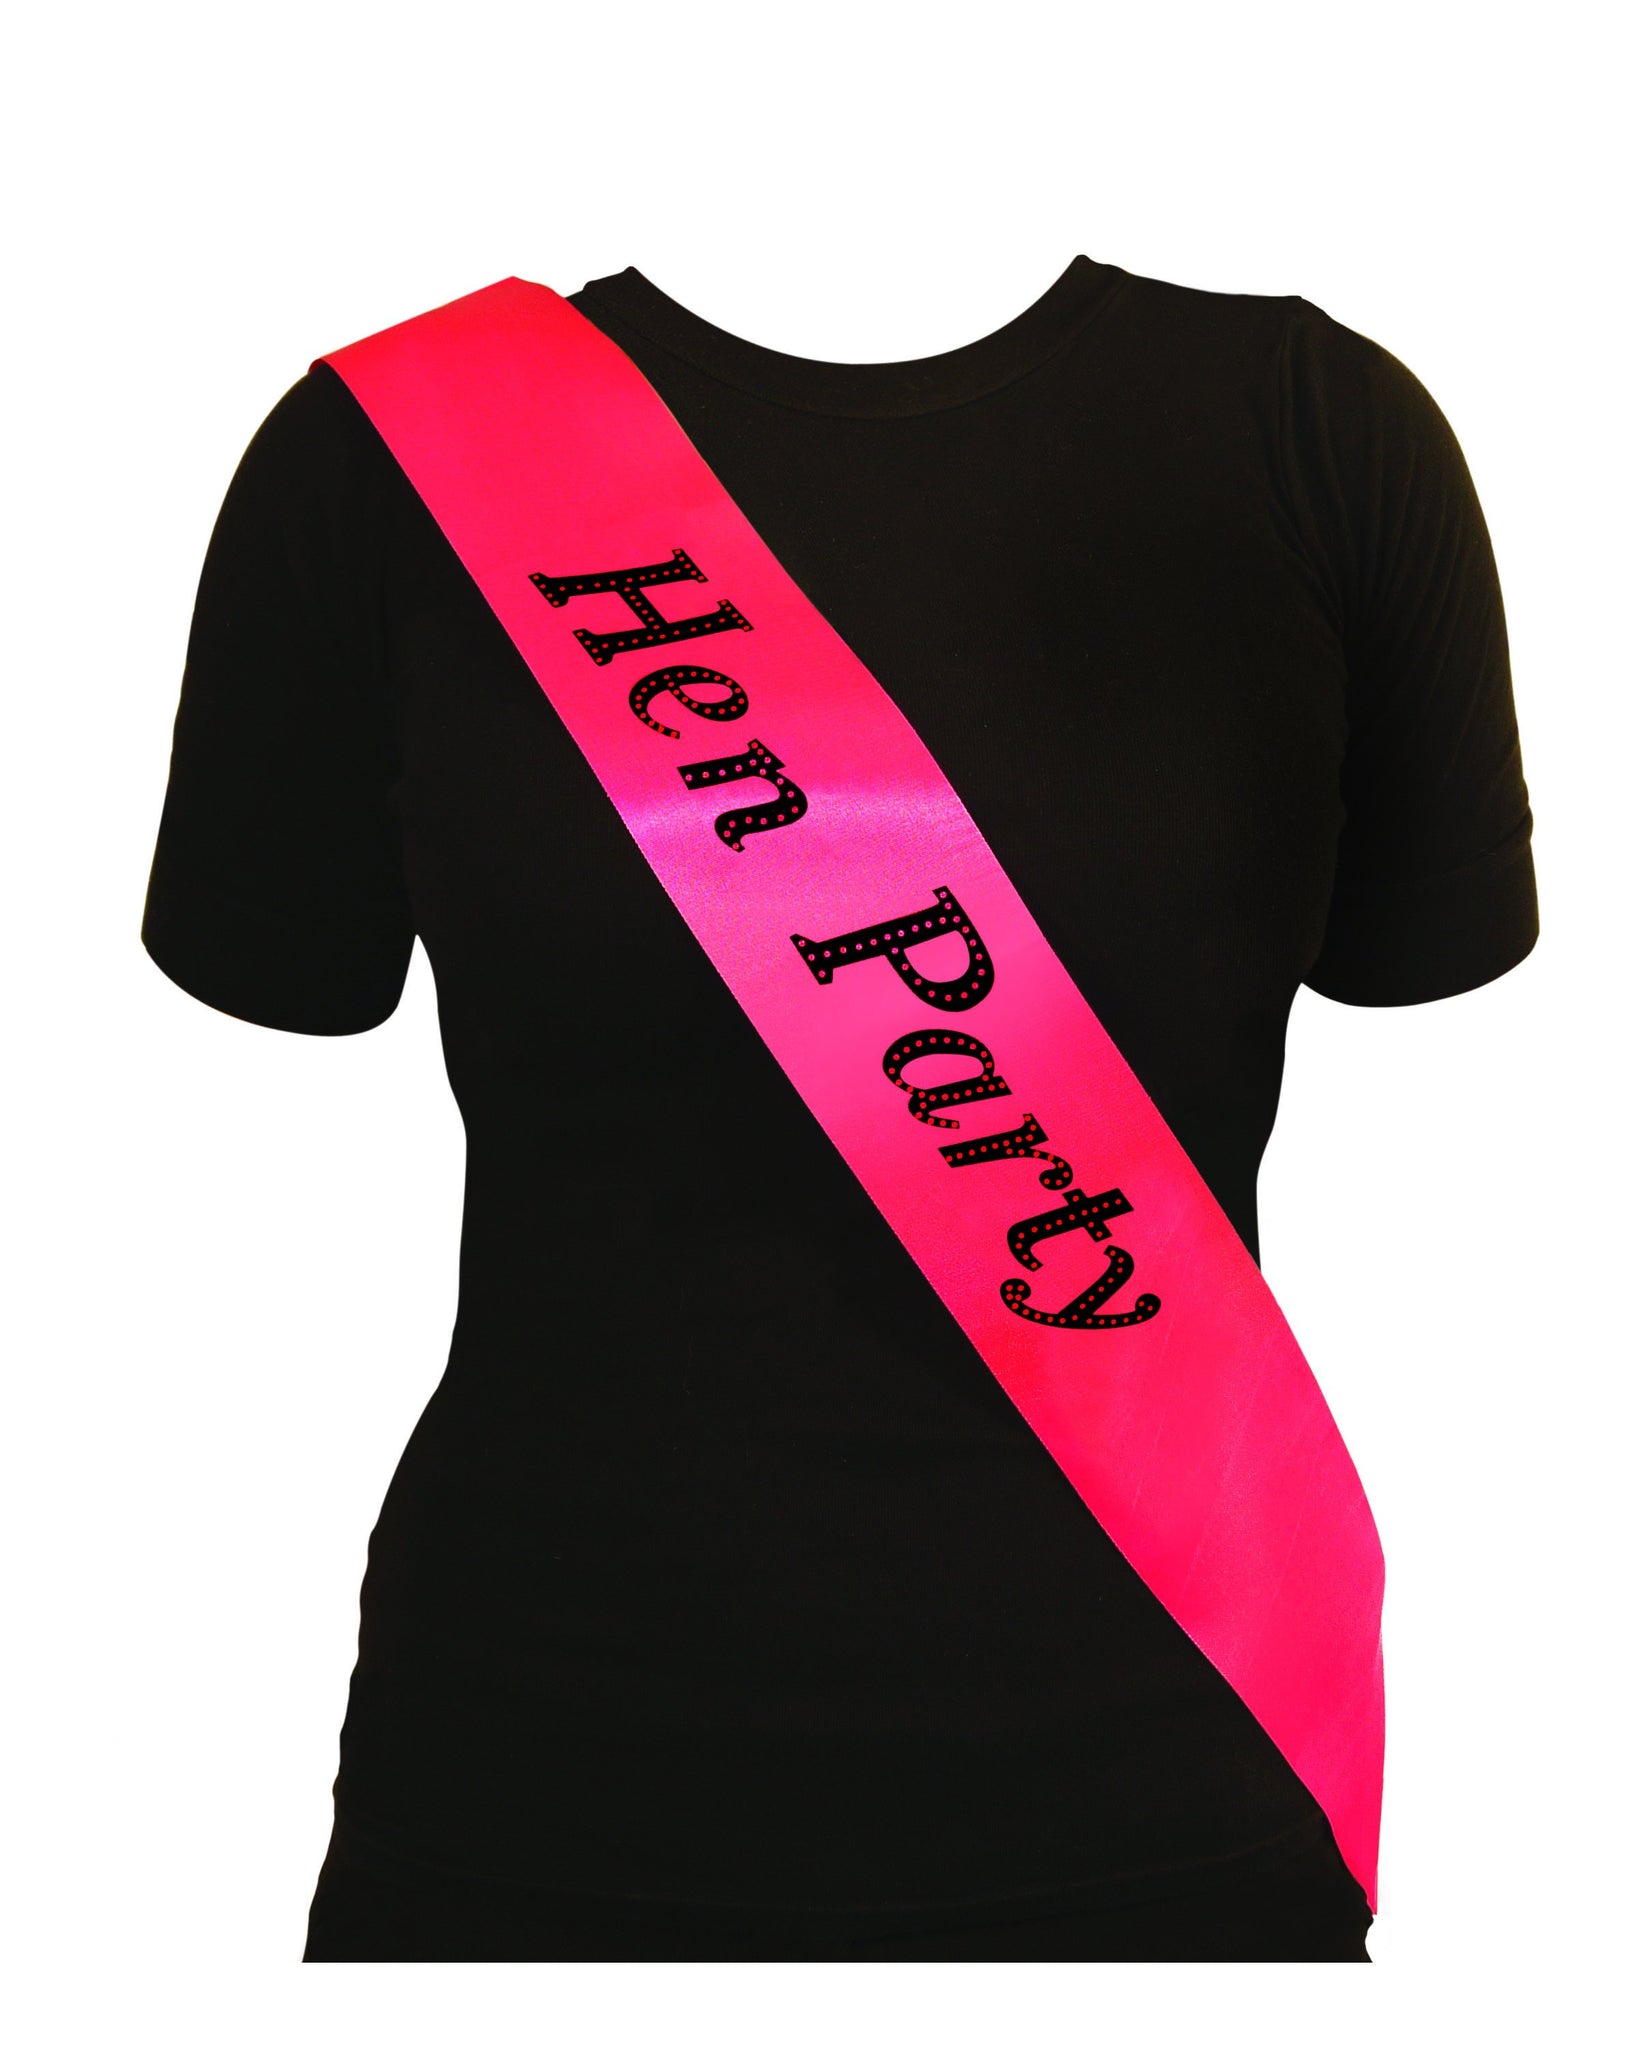 Hen Party Sash - Hot Pink/Black Henbrandt